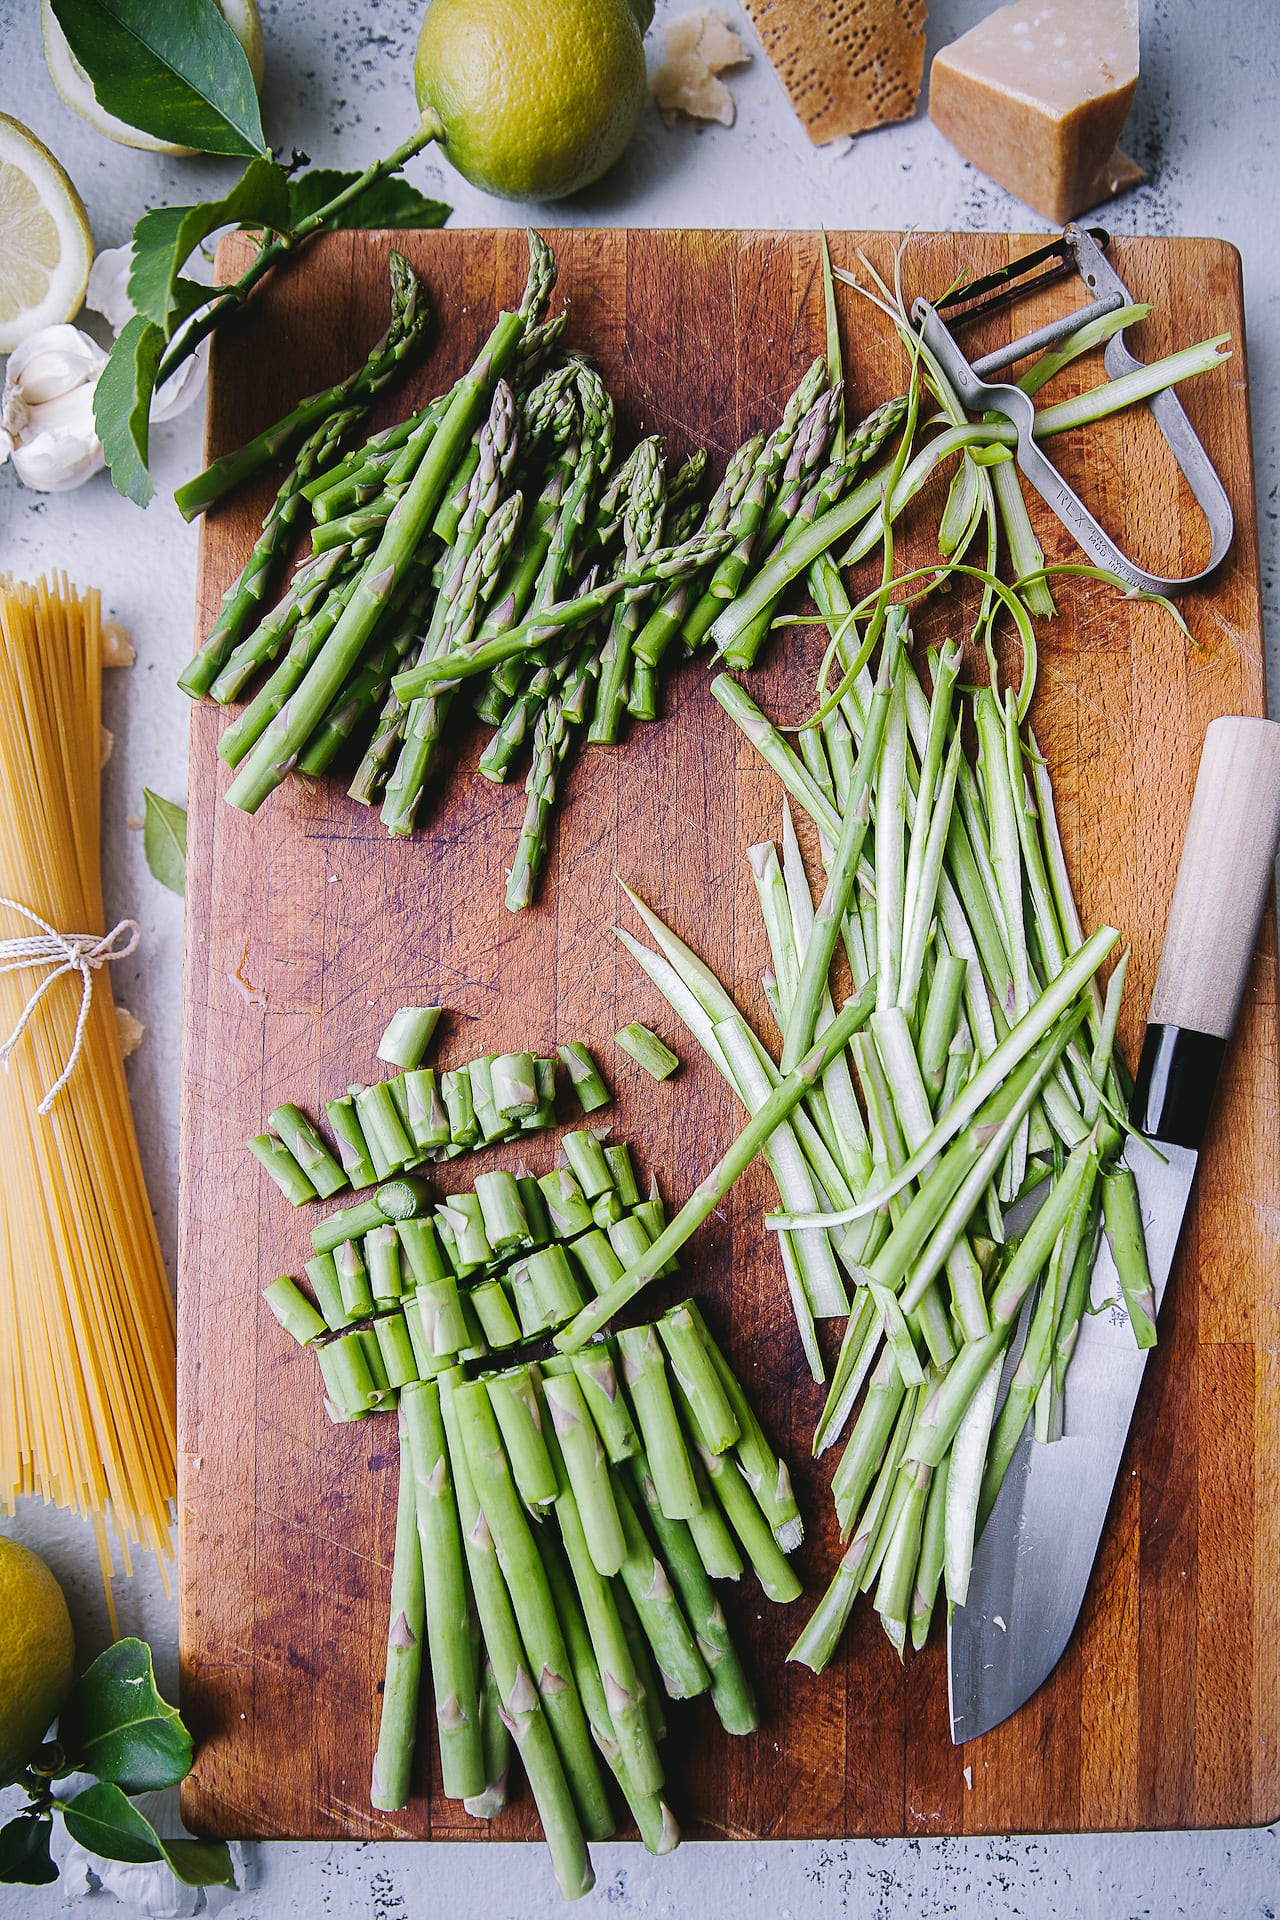 Ingredient shots for Asparagus Spaghetti (Pasta with Asparagus) #foodphotography #pasta #photography #noodles #spaghetti #easy #5ingredients